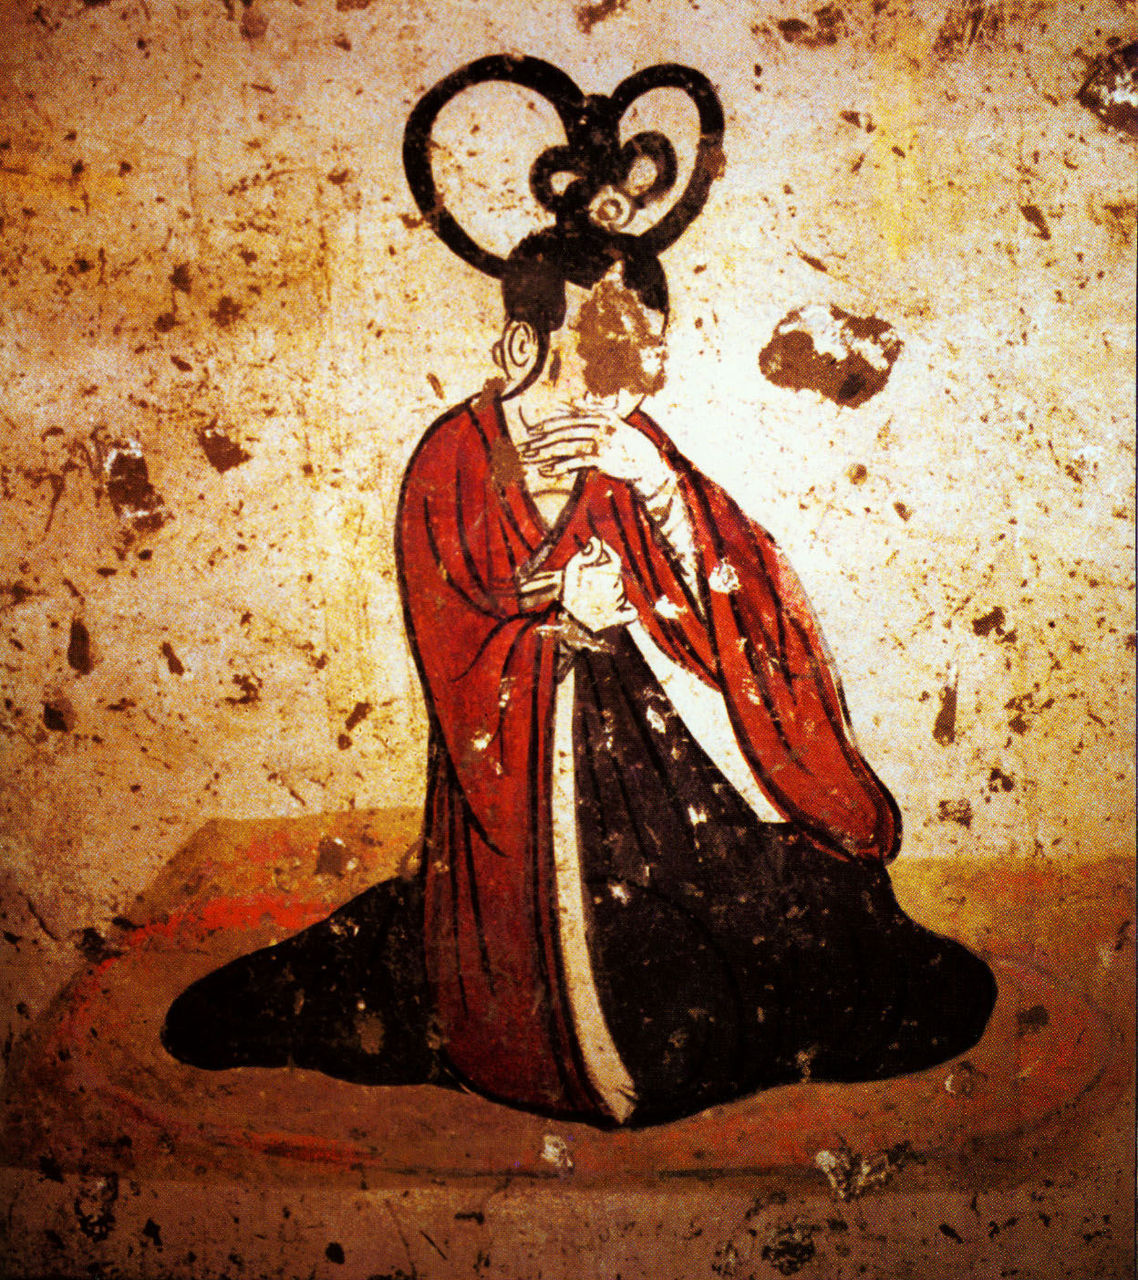 File:韋貴妃墓壁畫1.jpg - Wikimedia Commons